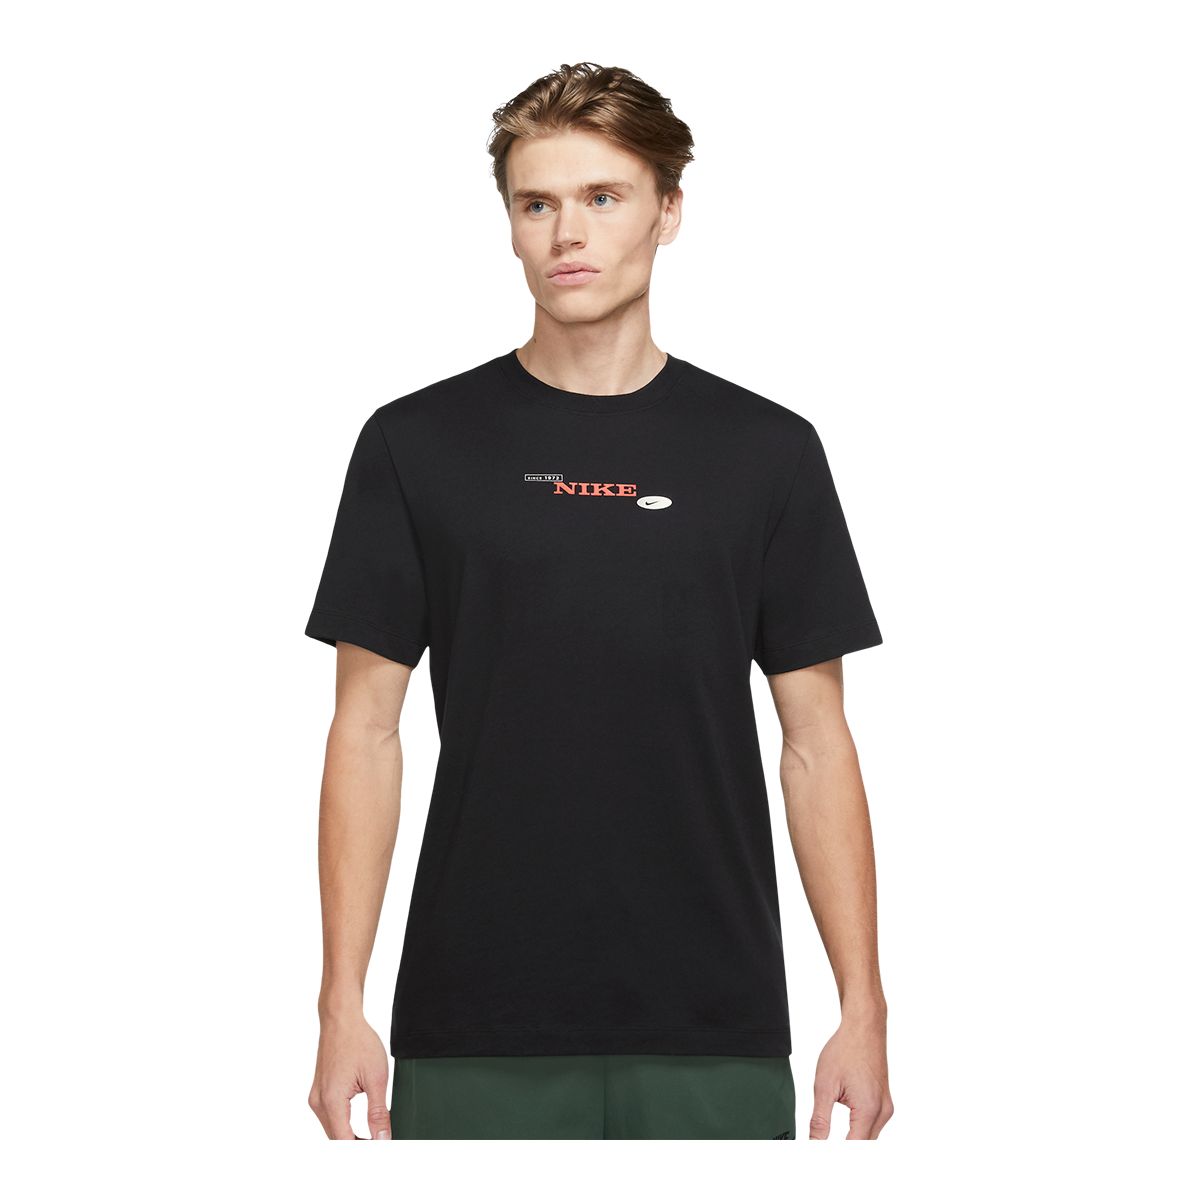 Nike / Men's Sportswear Rhythm Photo T-Shirt